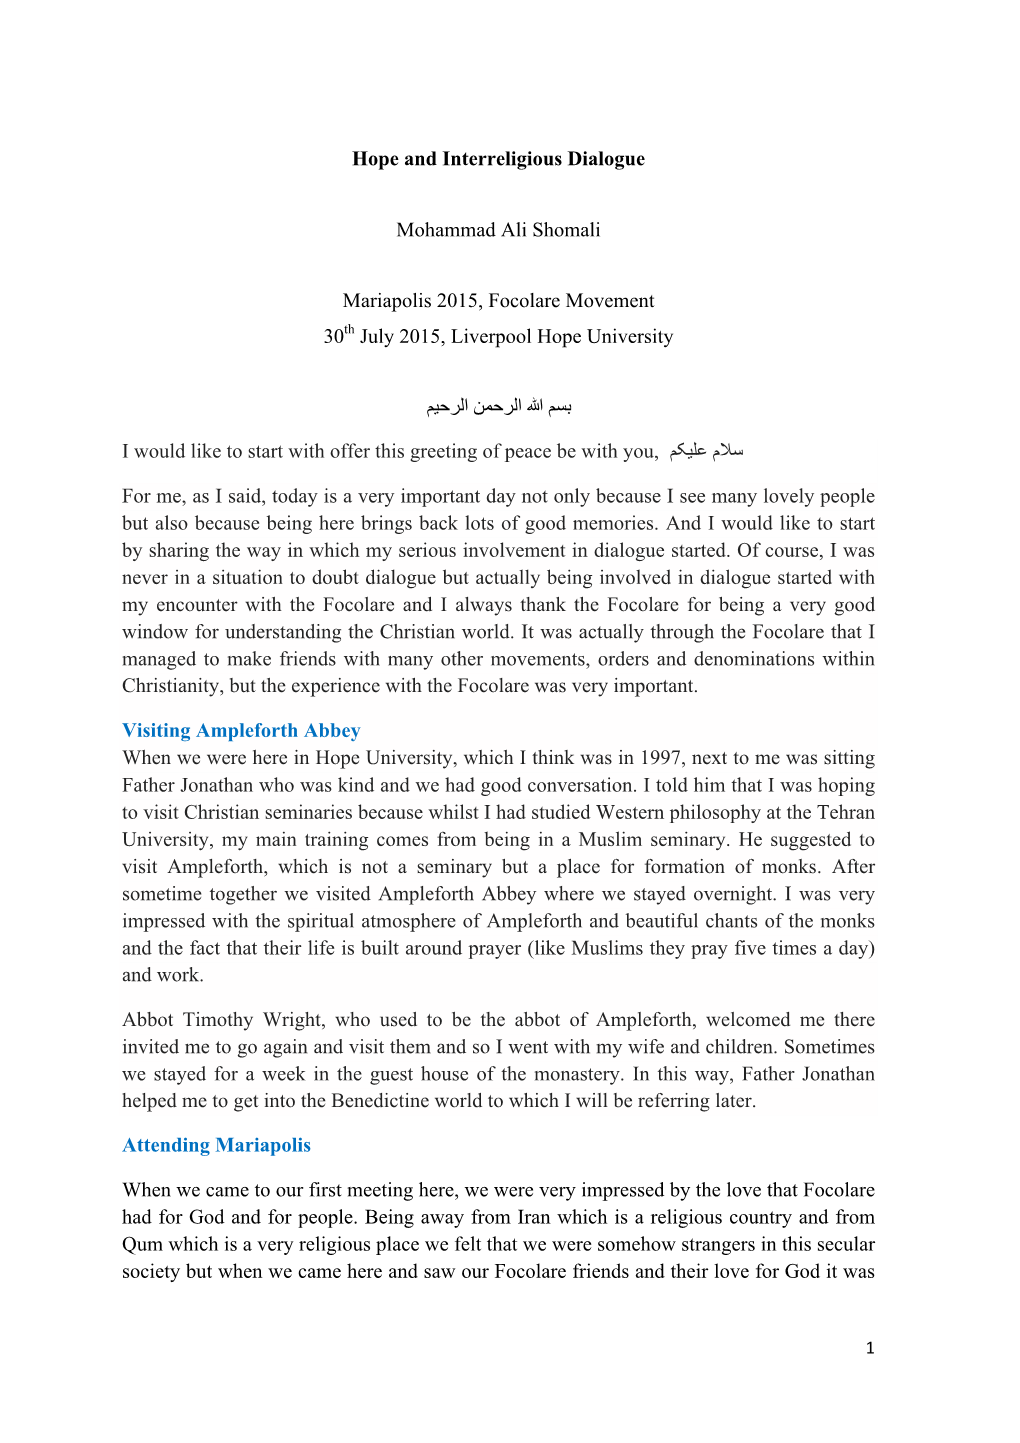 Hope and Interreligious Dialogue Mohammad Ali Shomali Mariapolis